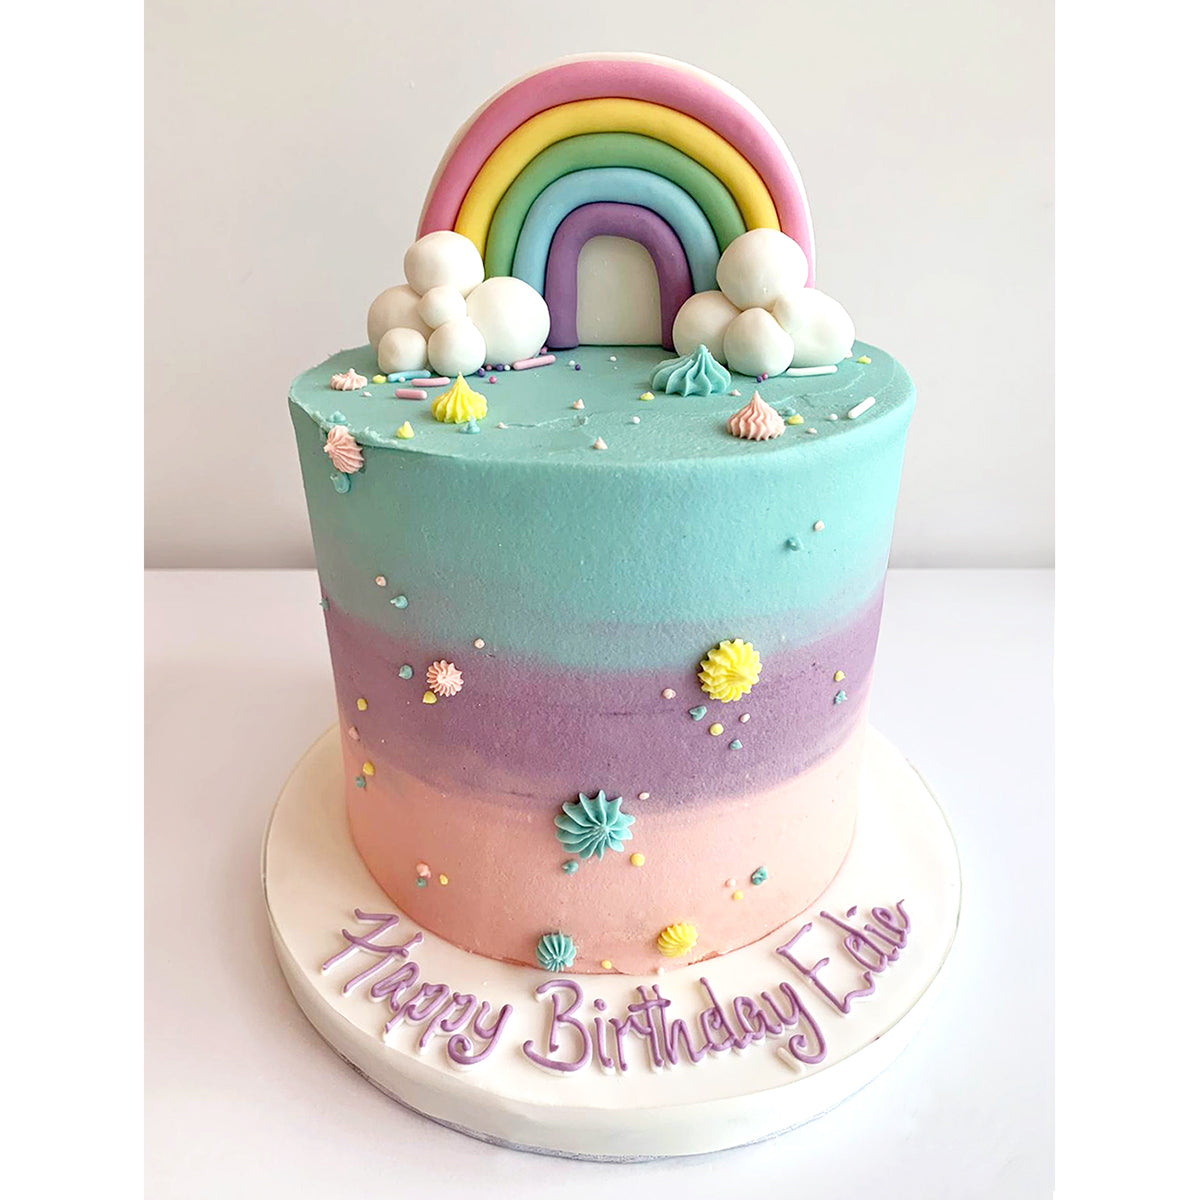 Vegan 'Wish Upon a Rainbow' Celebration Cake